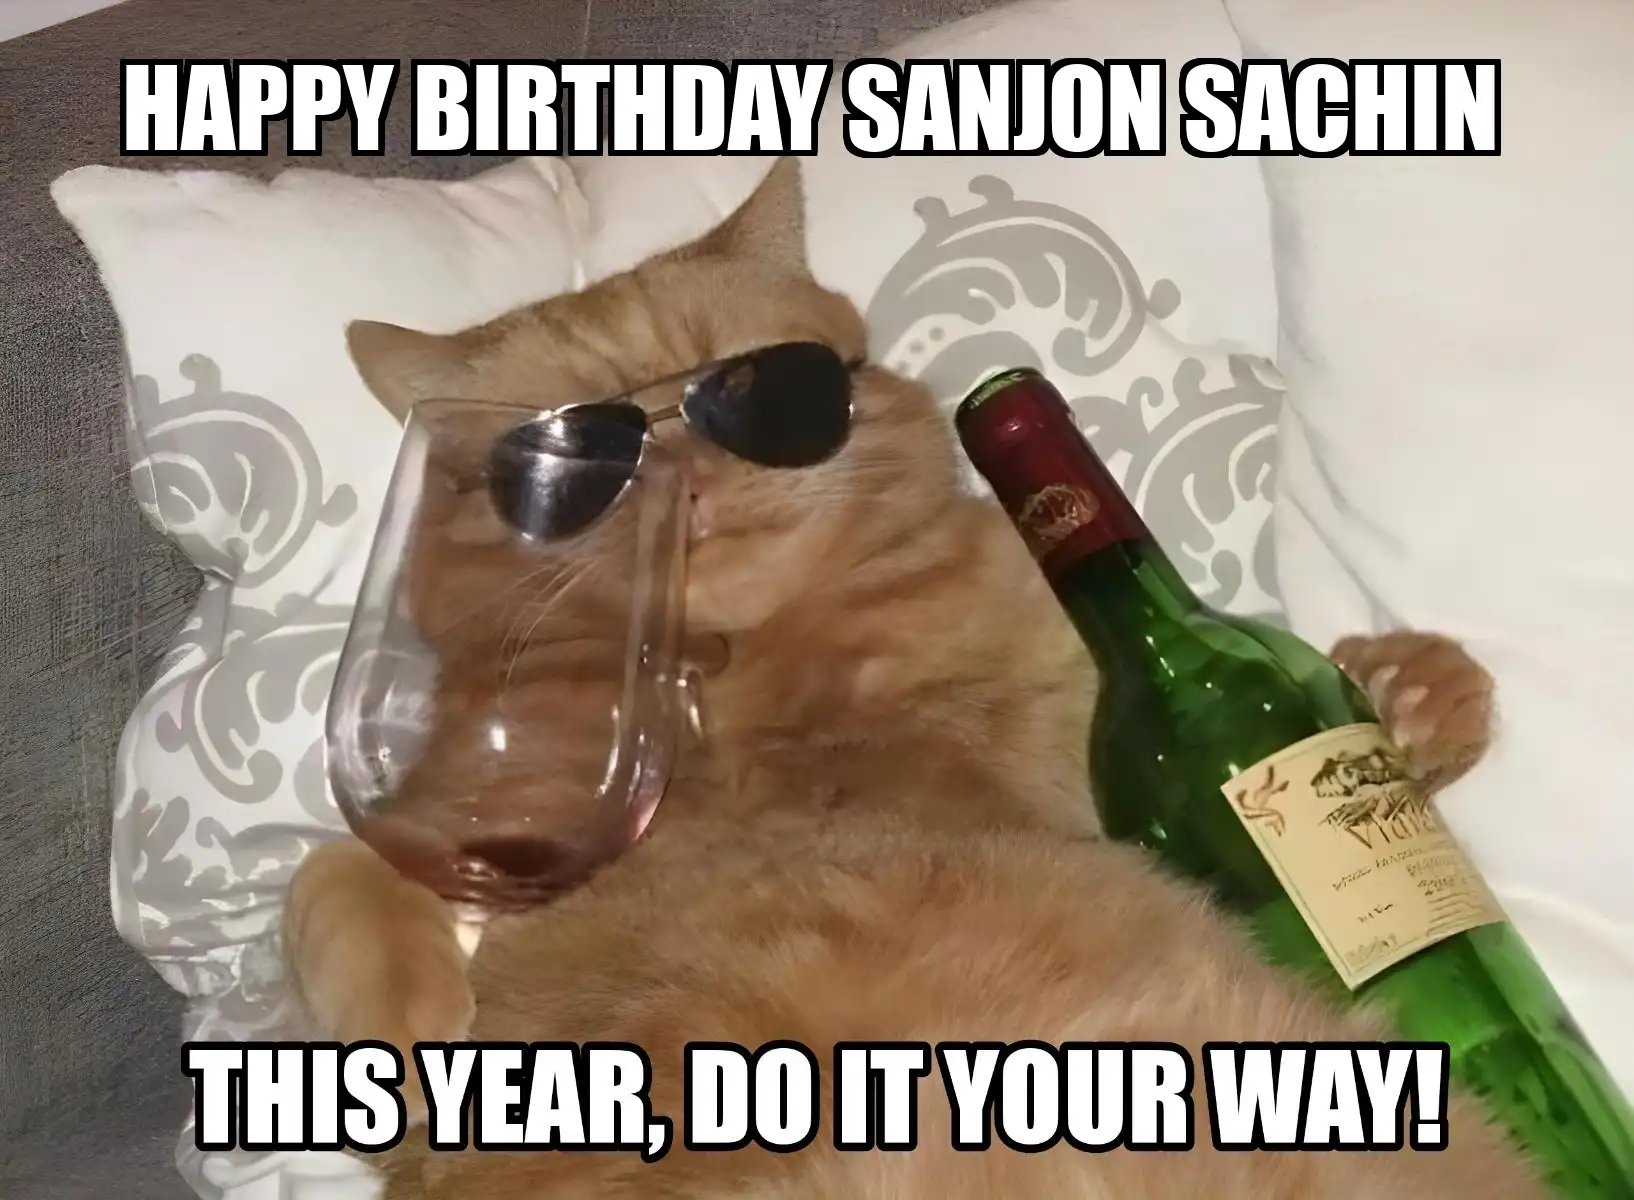 Happy Birthday Sanjon sachin This Year Do It Your Way Meme